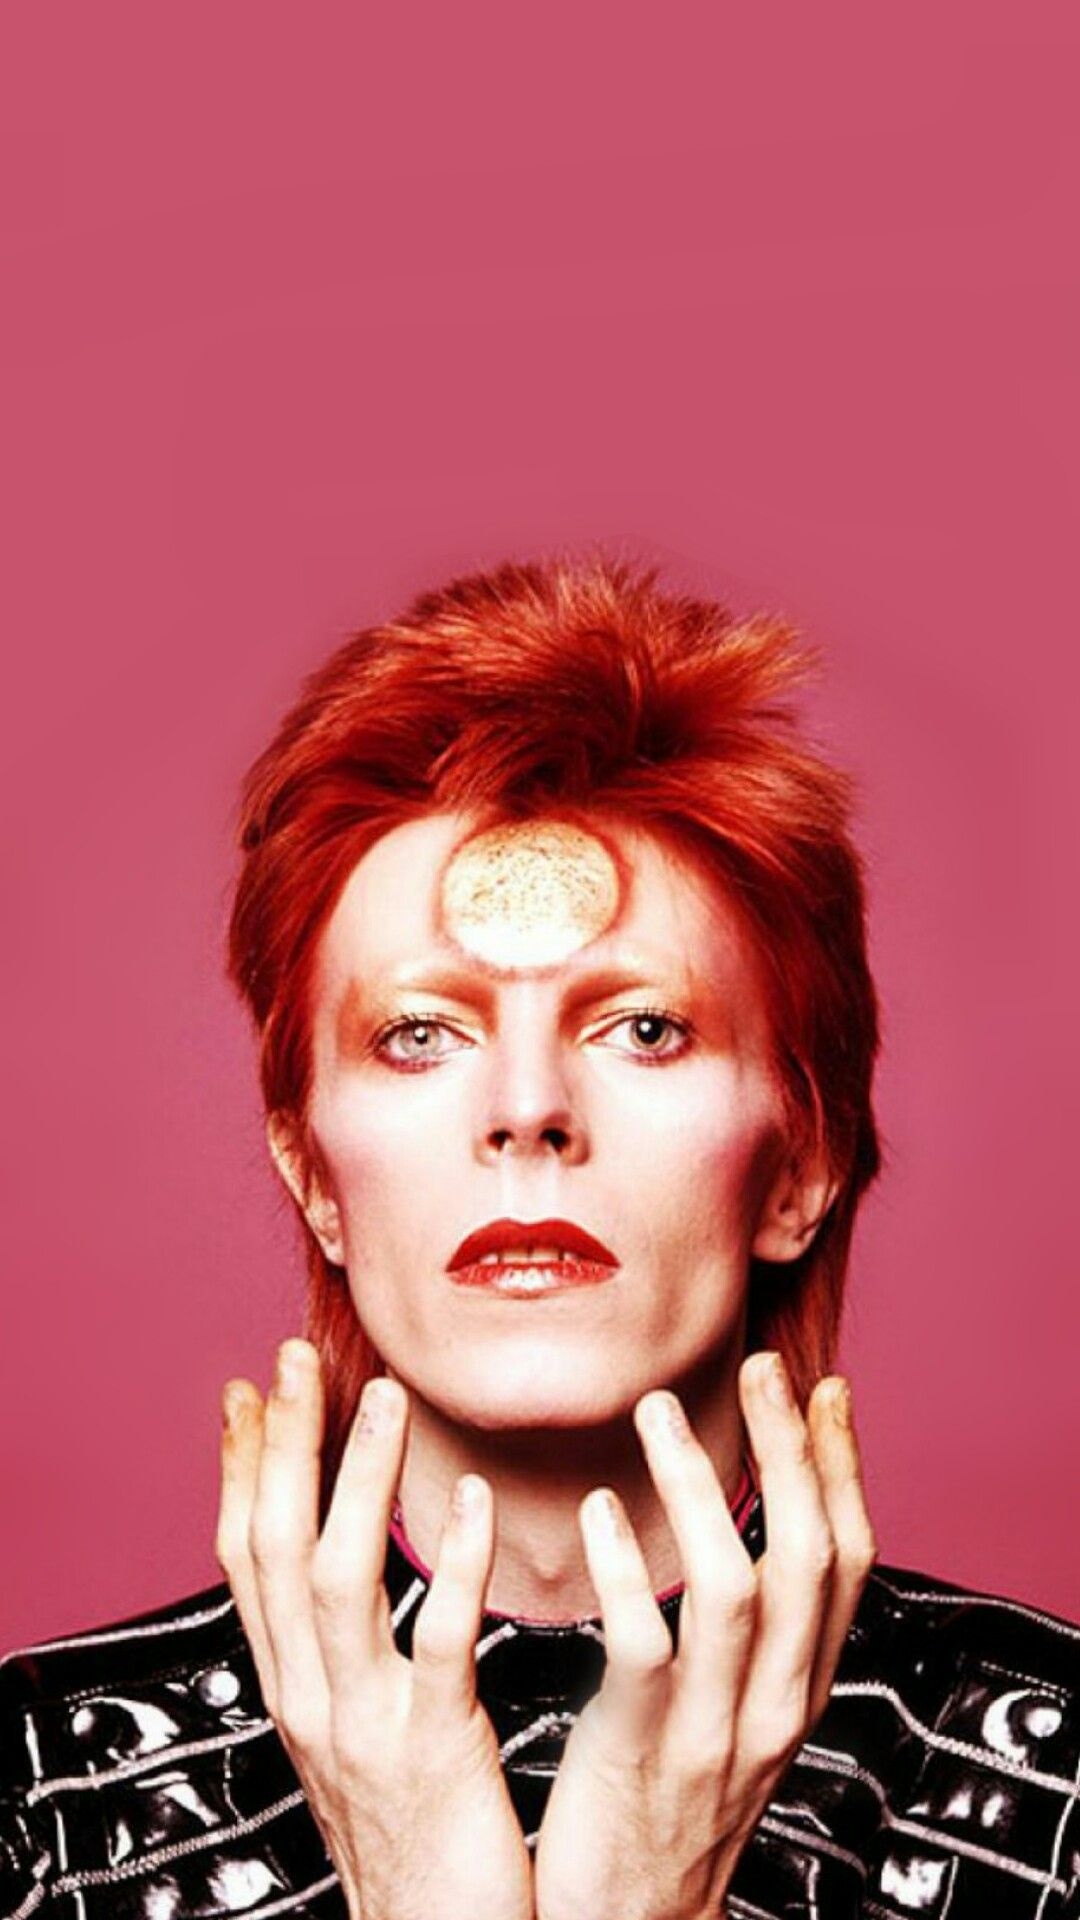 David Bowie: "Sorrow" peaked at number three on the UK Singles Chart. 1080x1920 Full HD Wallpaper.